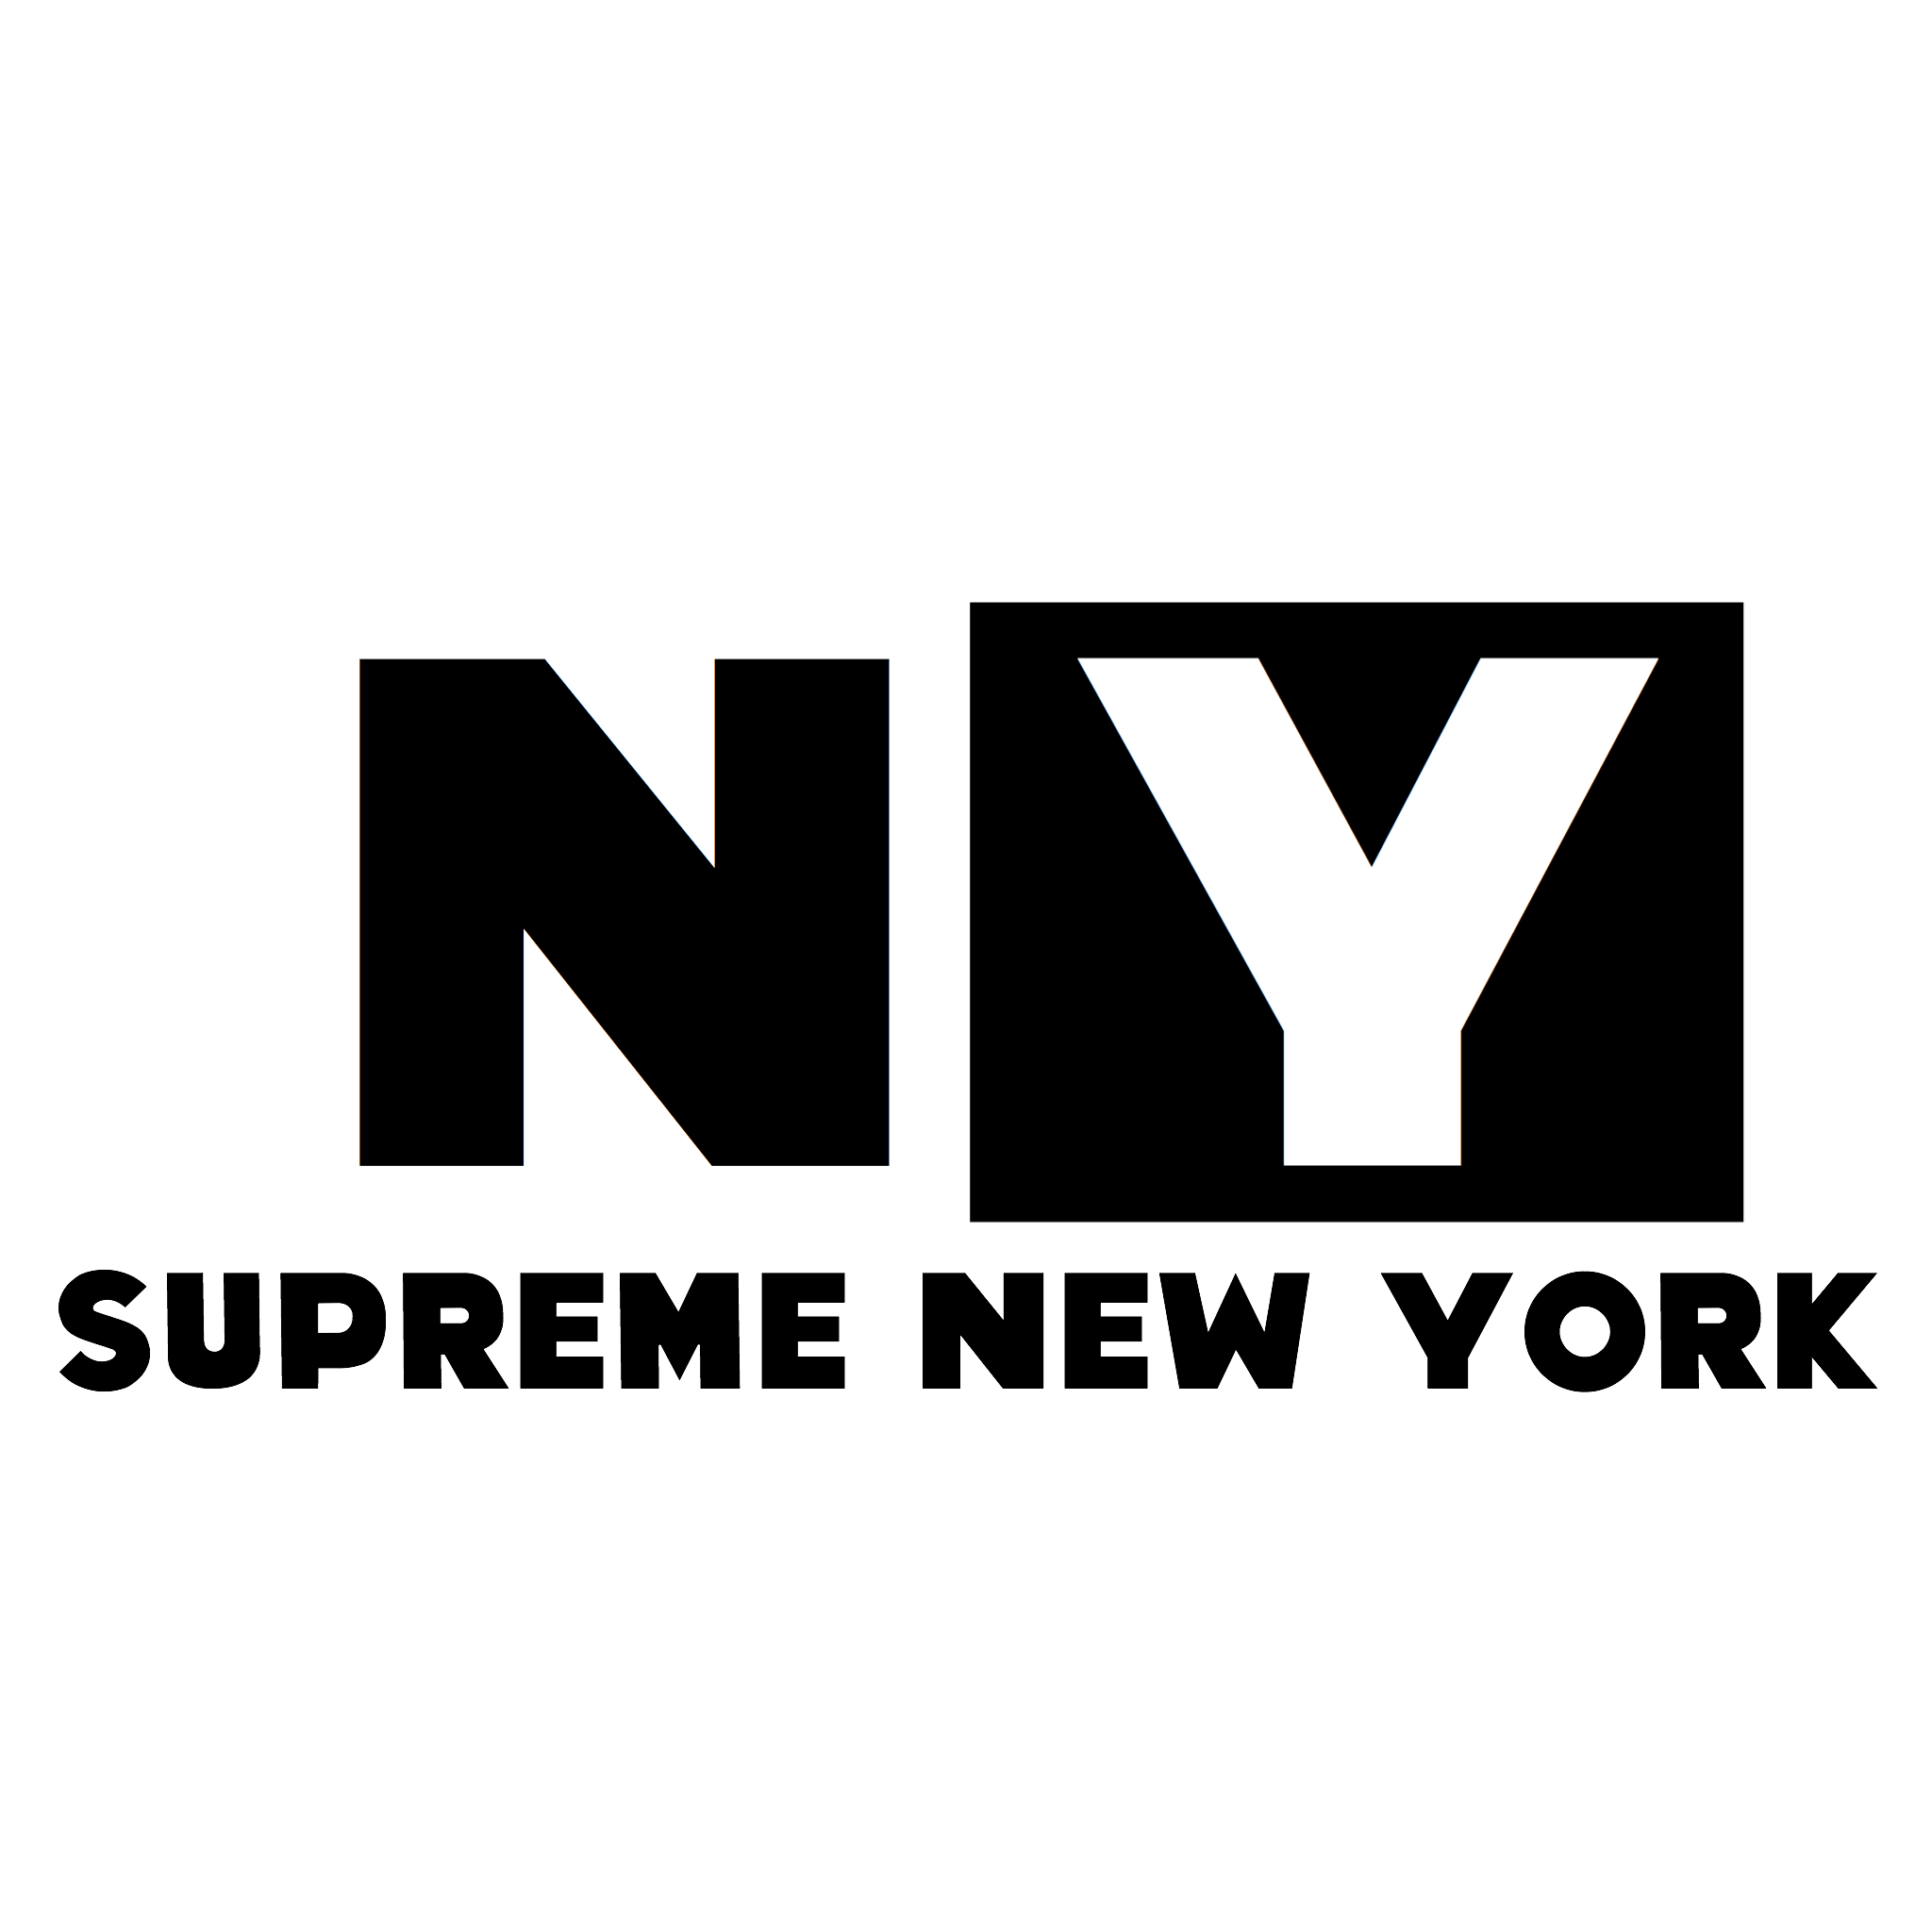 Supreme New York Logo - Supreme logo mock ups - Album on Imgur